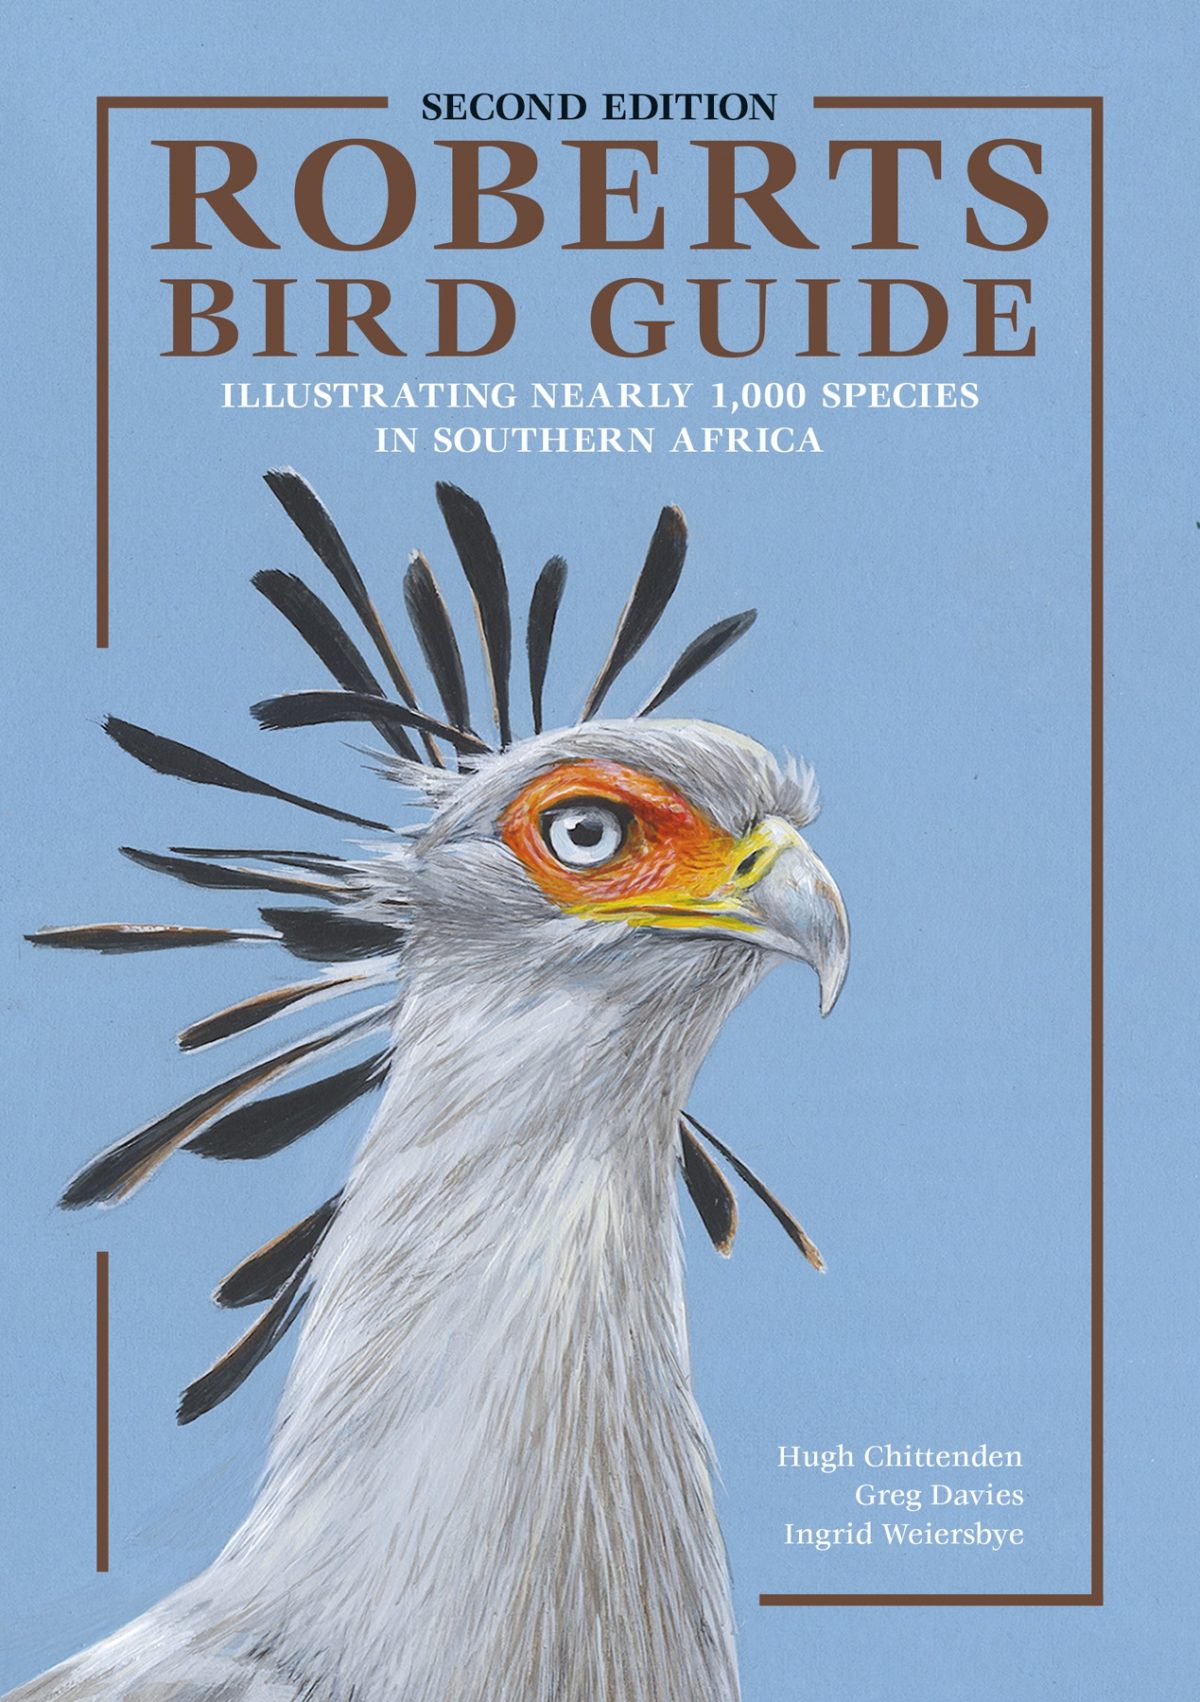 birds guide 2016 edition